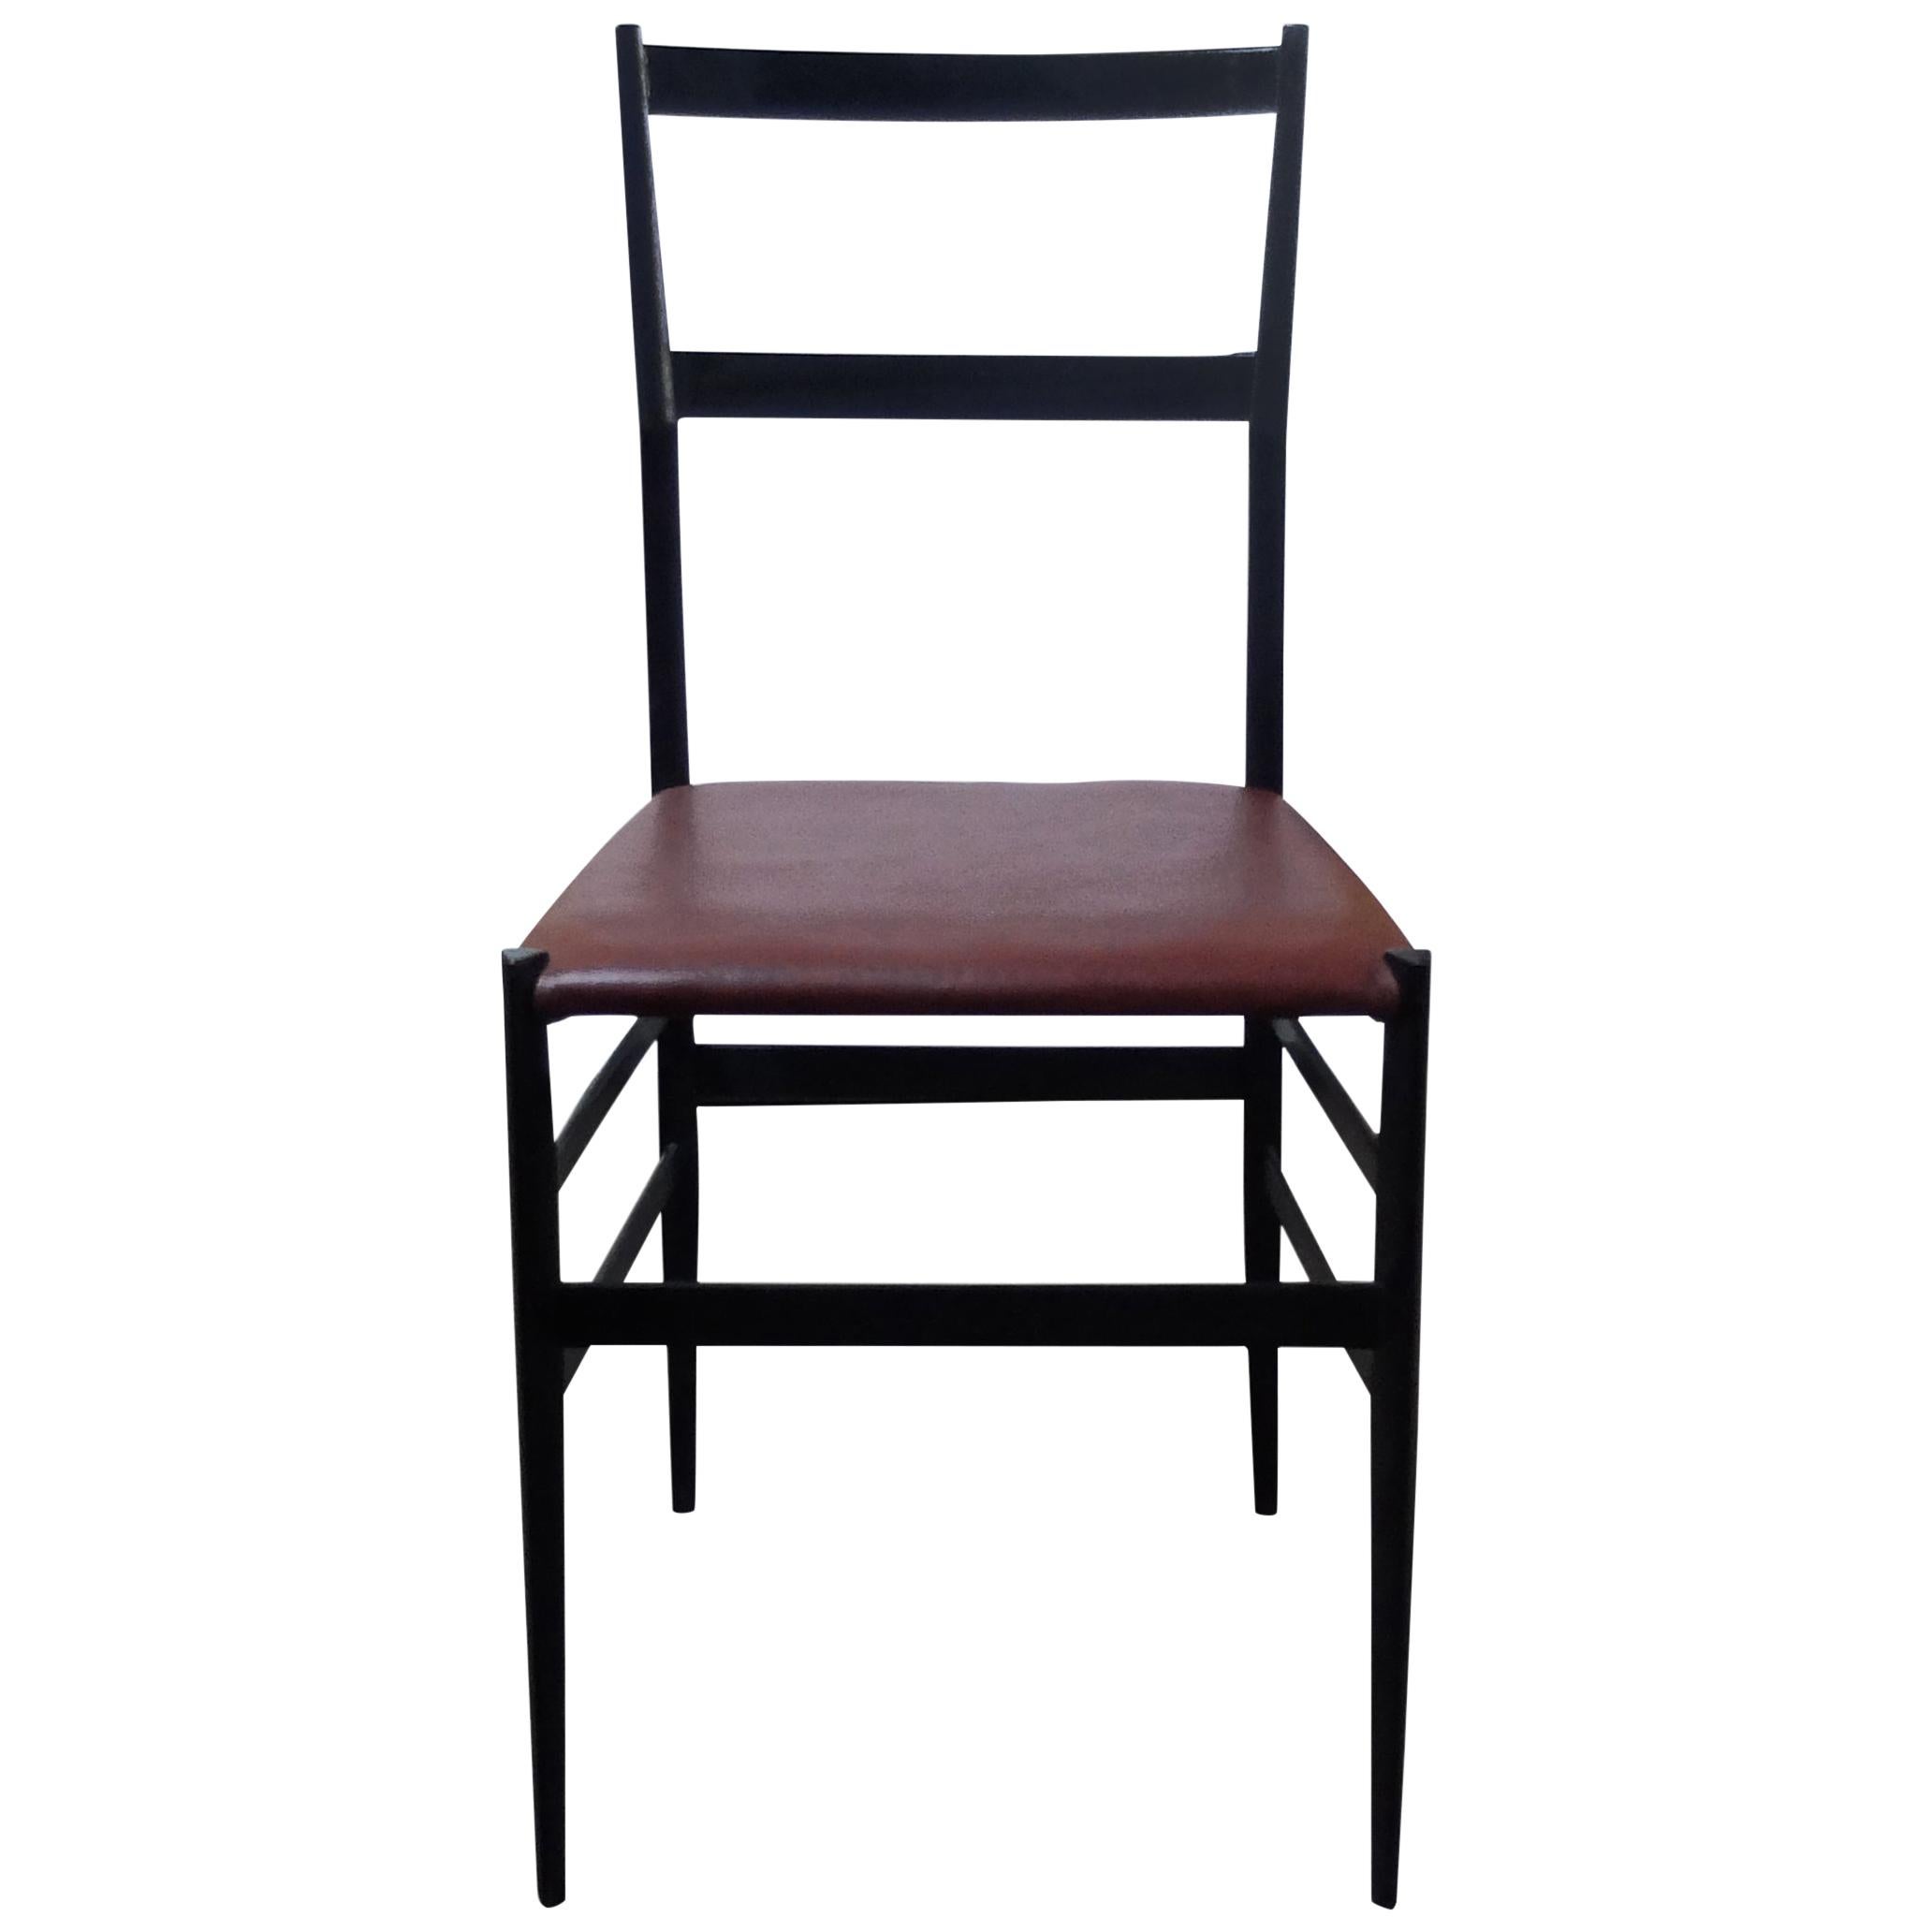 Gio Ponti for Cassina, Midcentury Set of 2 " Superleggera " Chairs, 1957